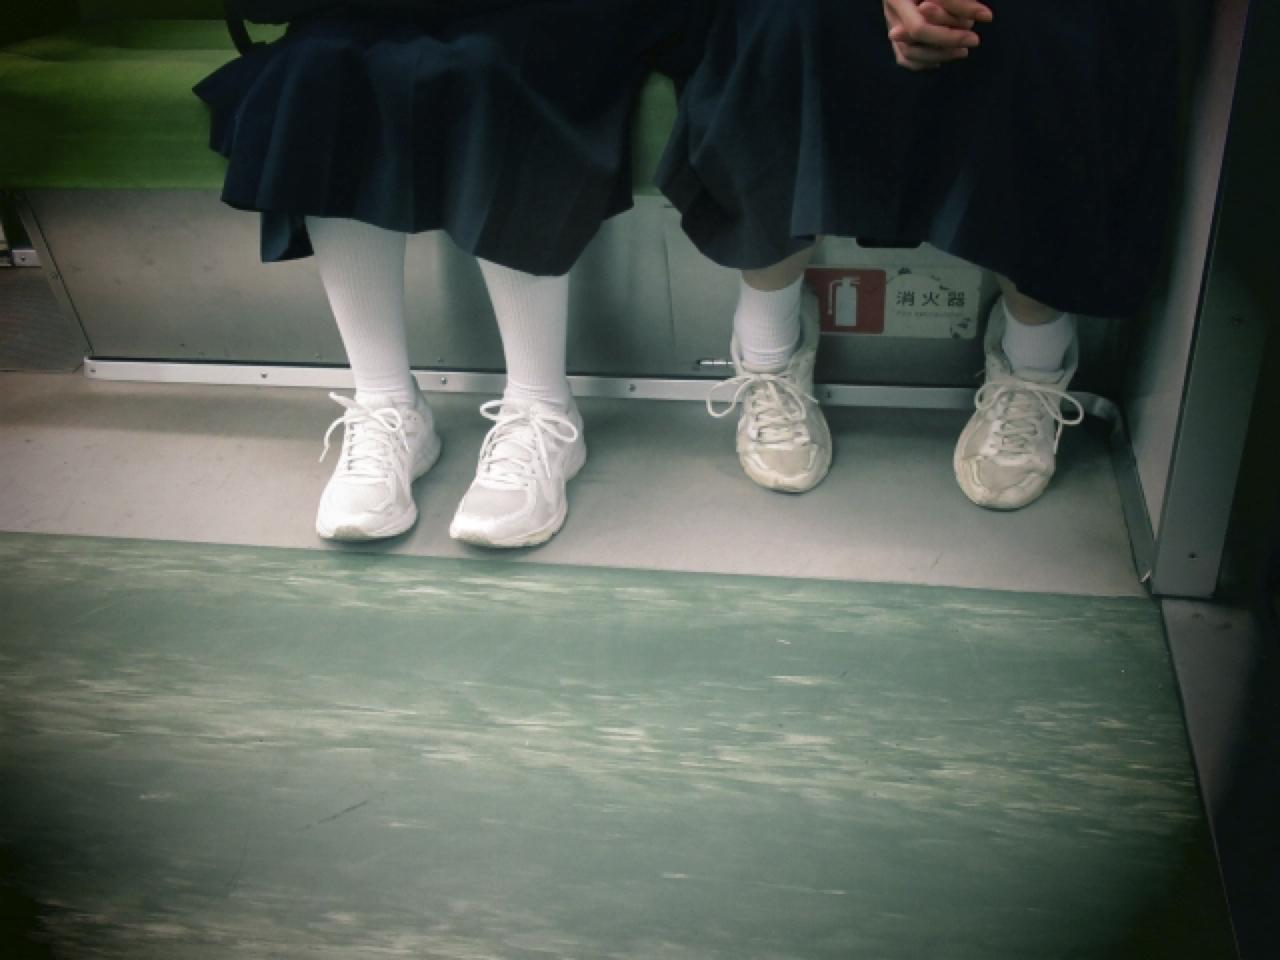 宮崎の中学校黒い靴下禁止